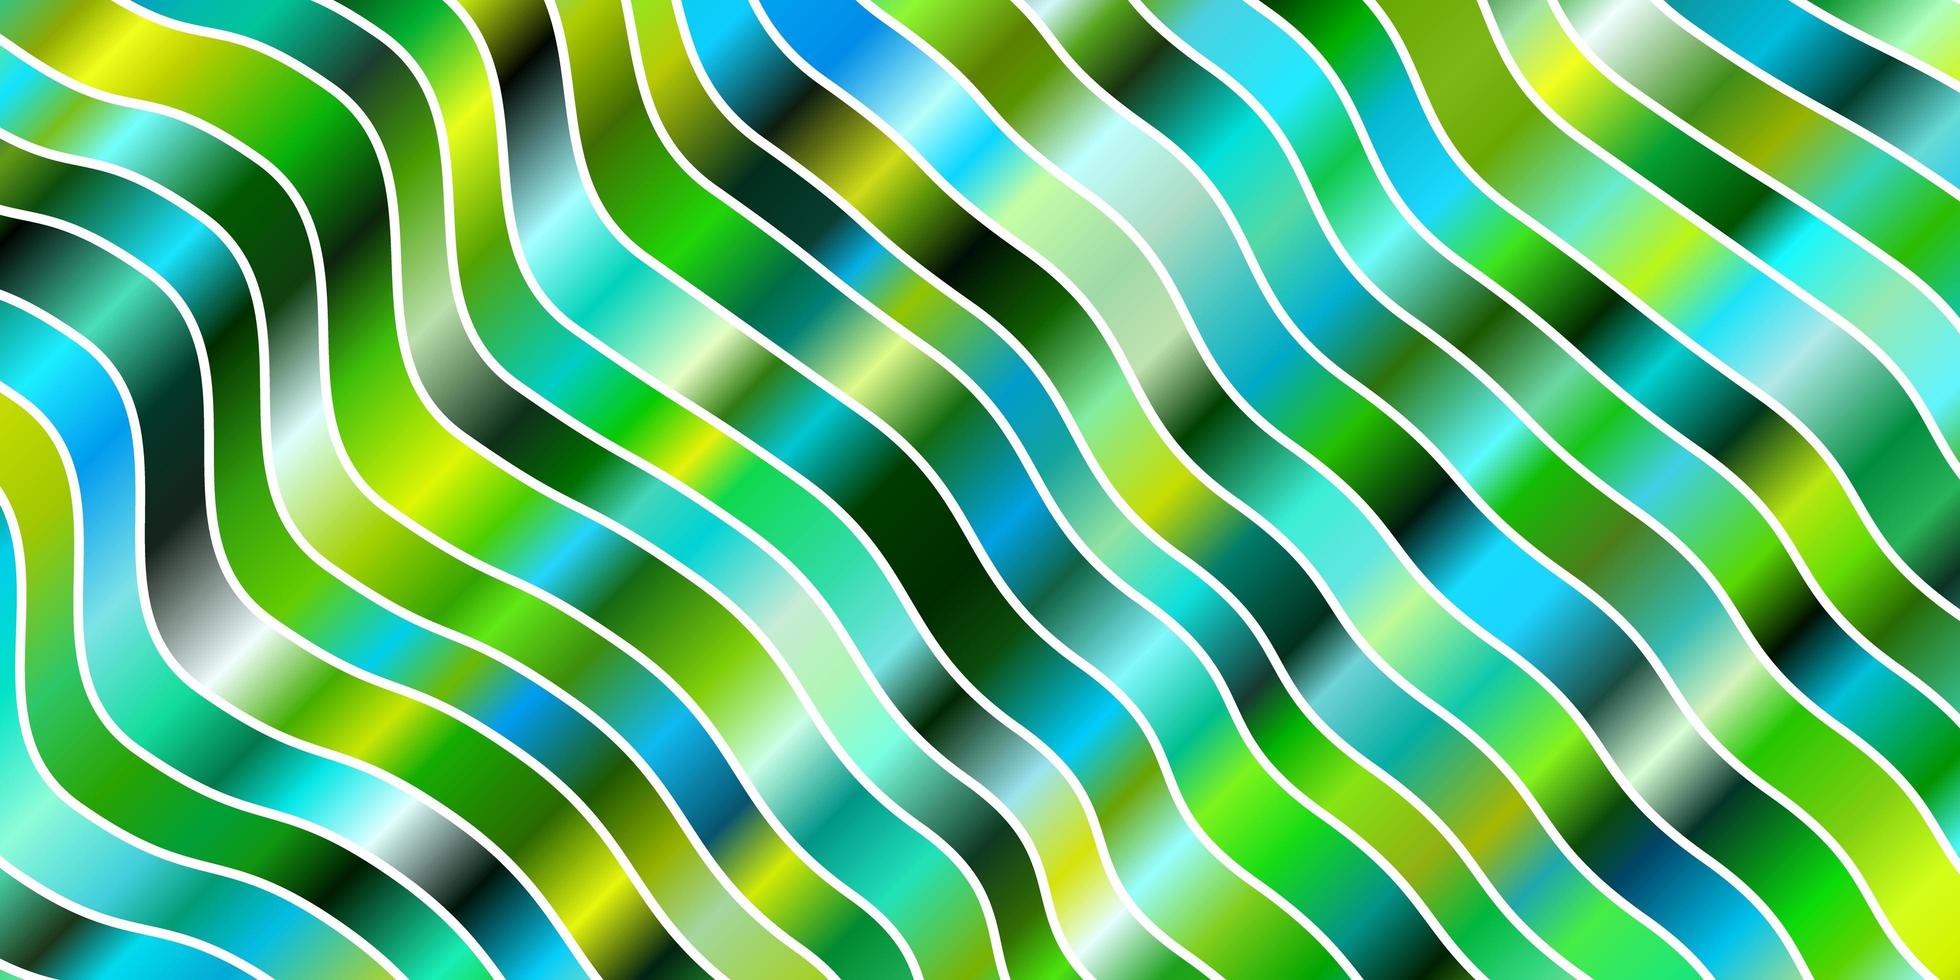 Telón de fondo de vector azul claro, verde con líneas dobladas. Ilustración abstracta con líneas de degradado bandy. patrón para comerciales, anuncios.